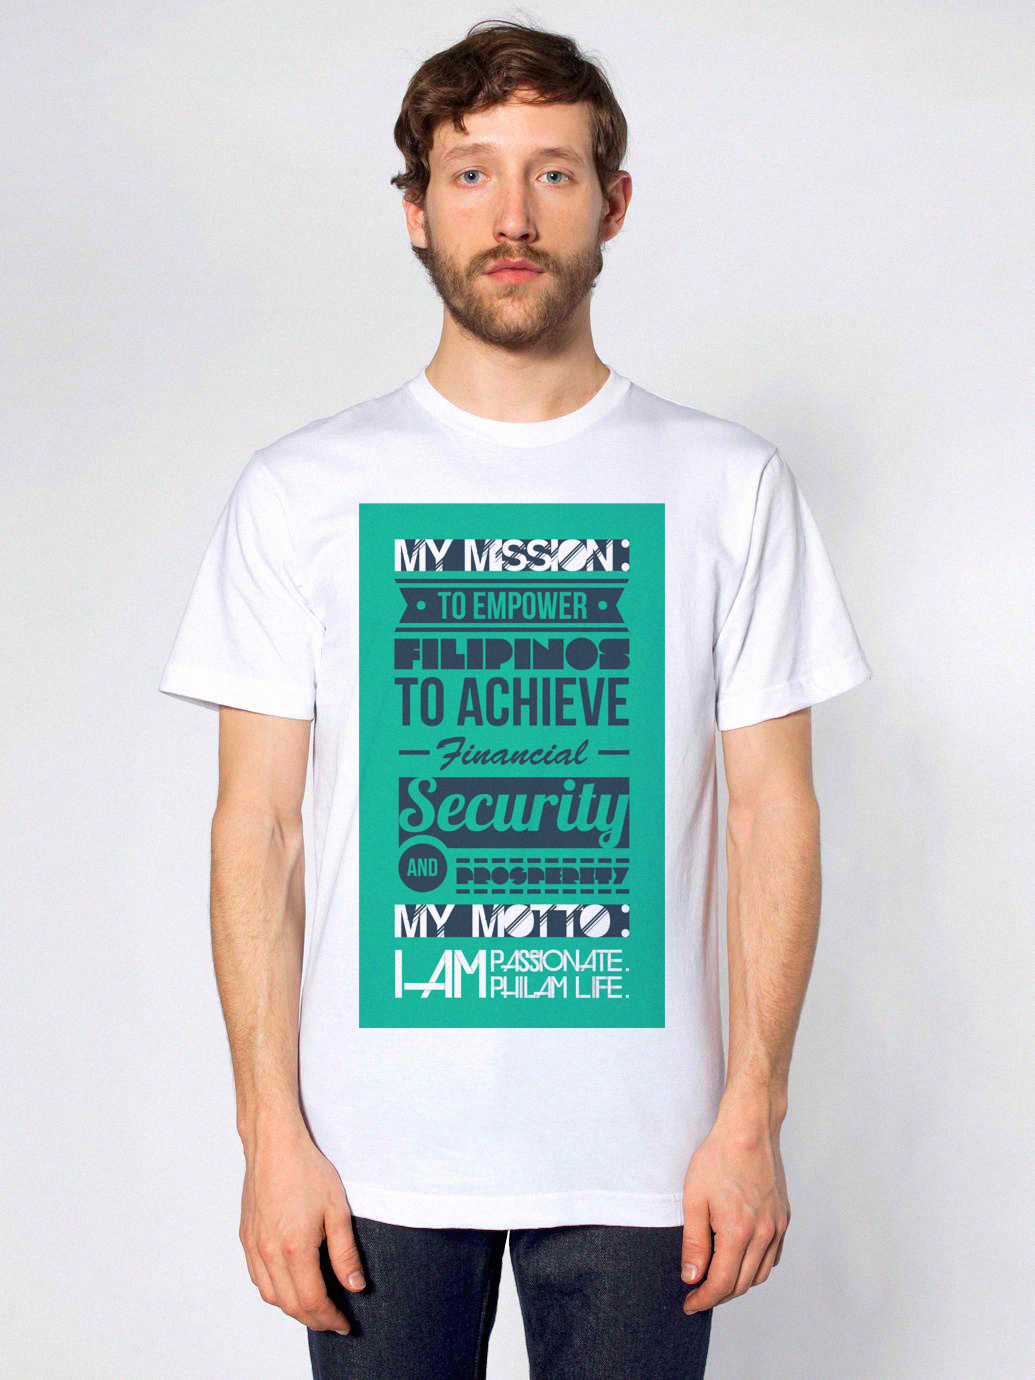 shirt design typography shirt design t shirt design